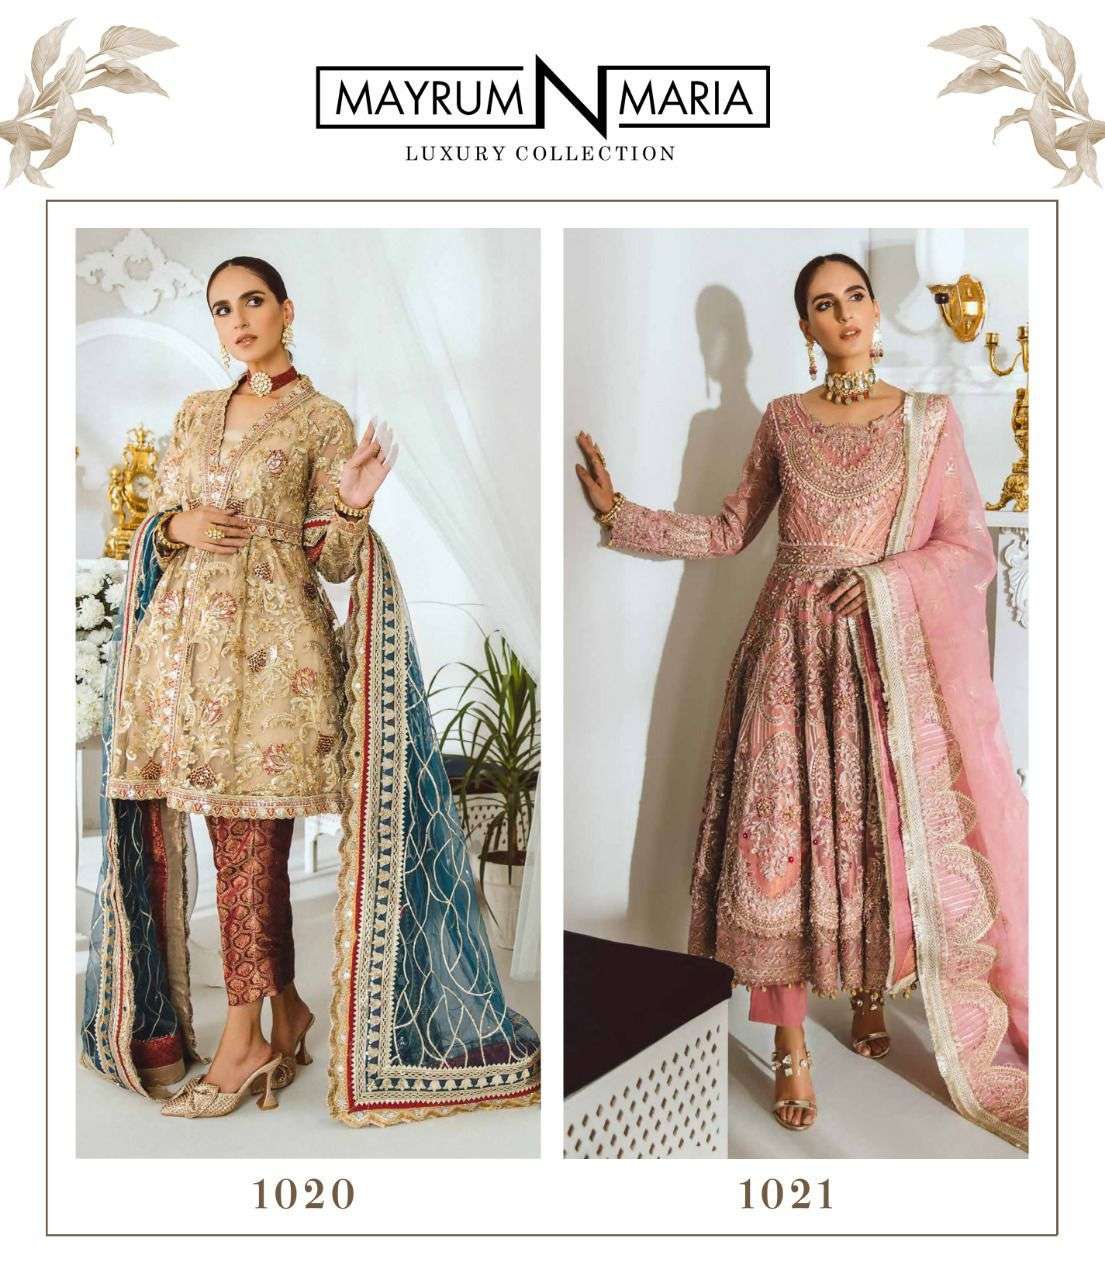 saniya trendz mayrum n maria bridal look designer pakistani suits wholesale maket india